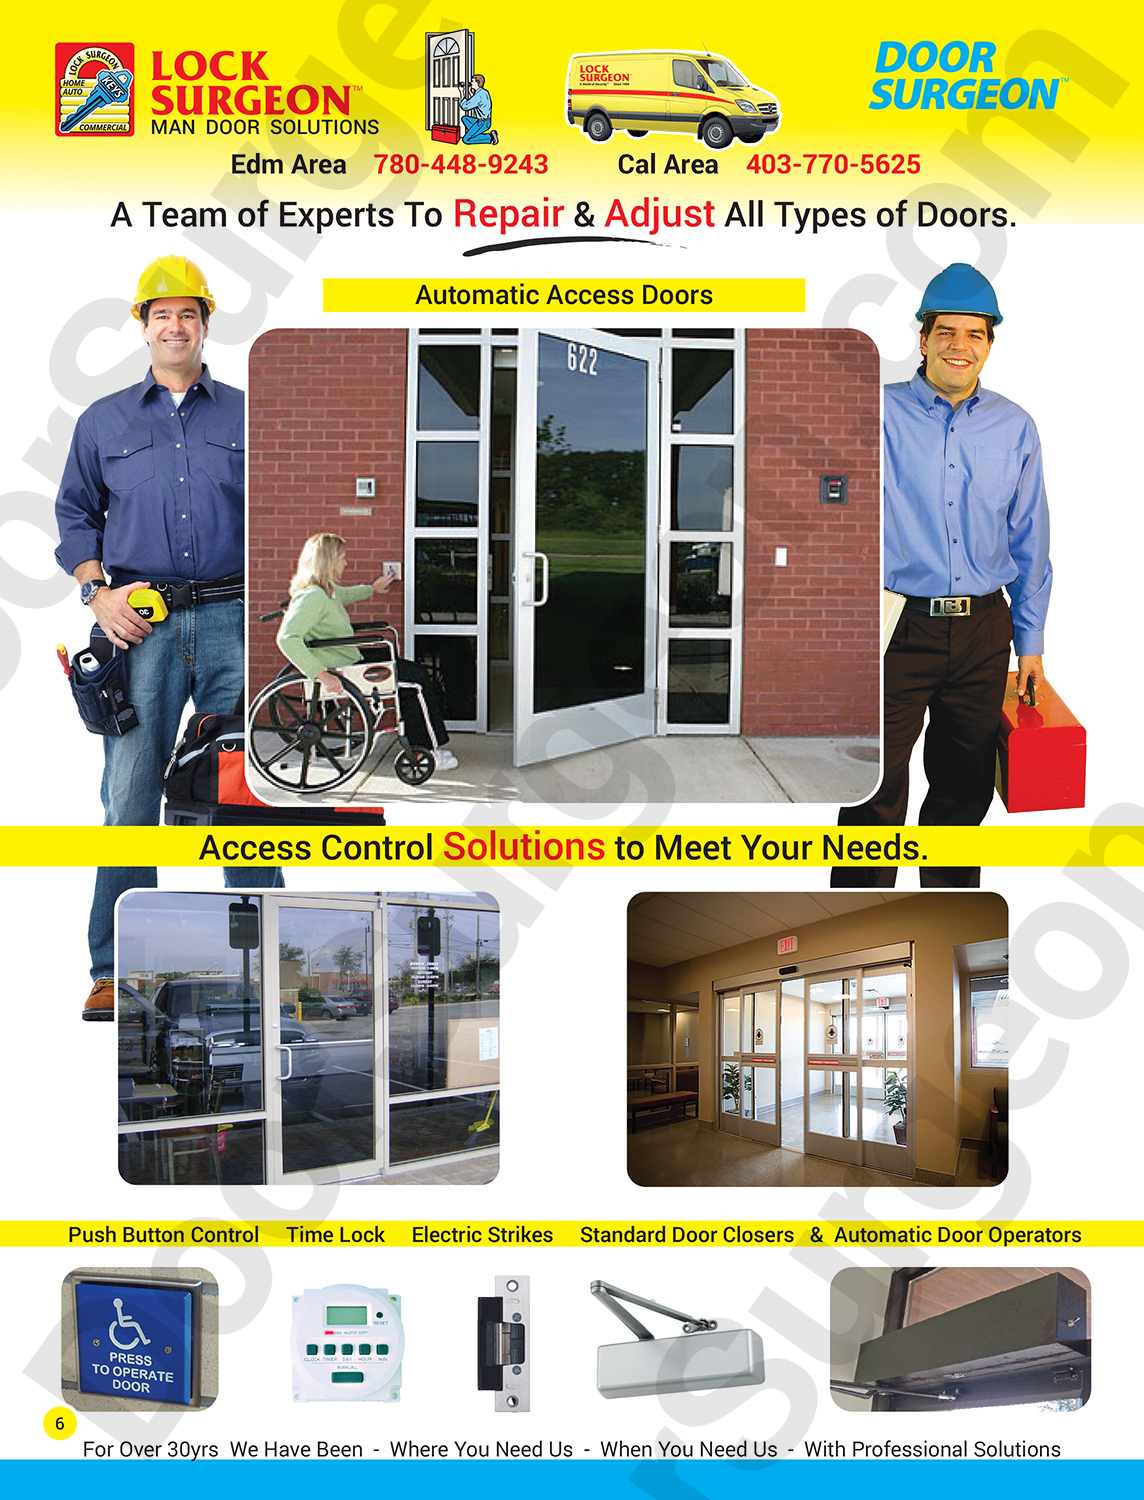 Door Surgeon automatic access doors & access control solutions for commercial industrial doors.